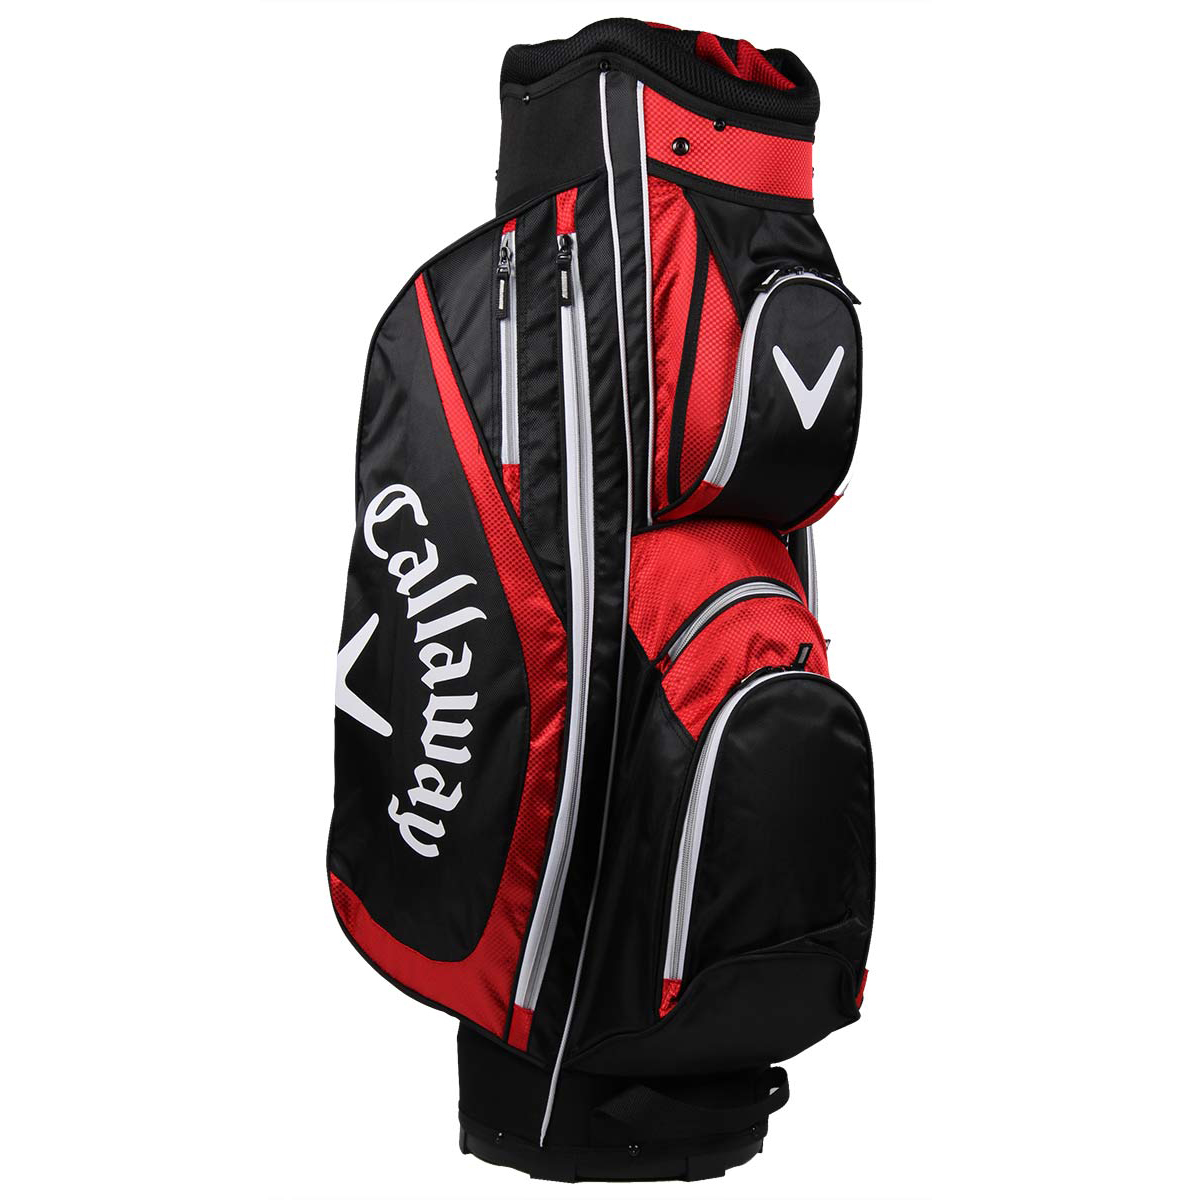 Callaway Golf XSeries Cart Bag from american golf